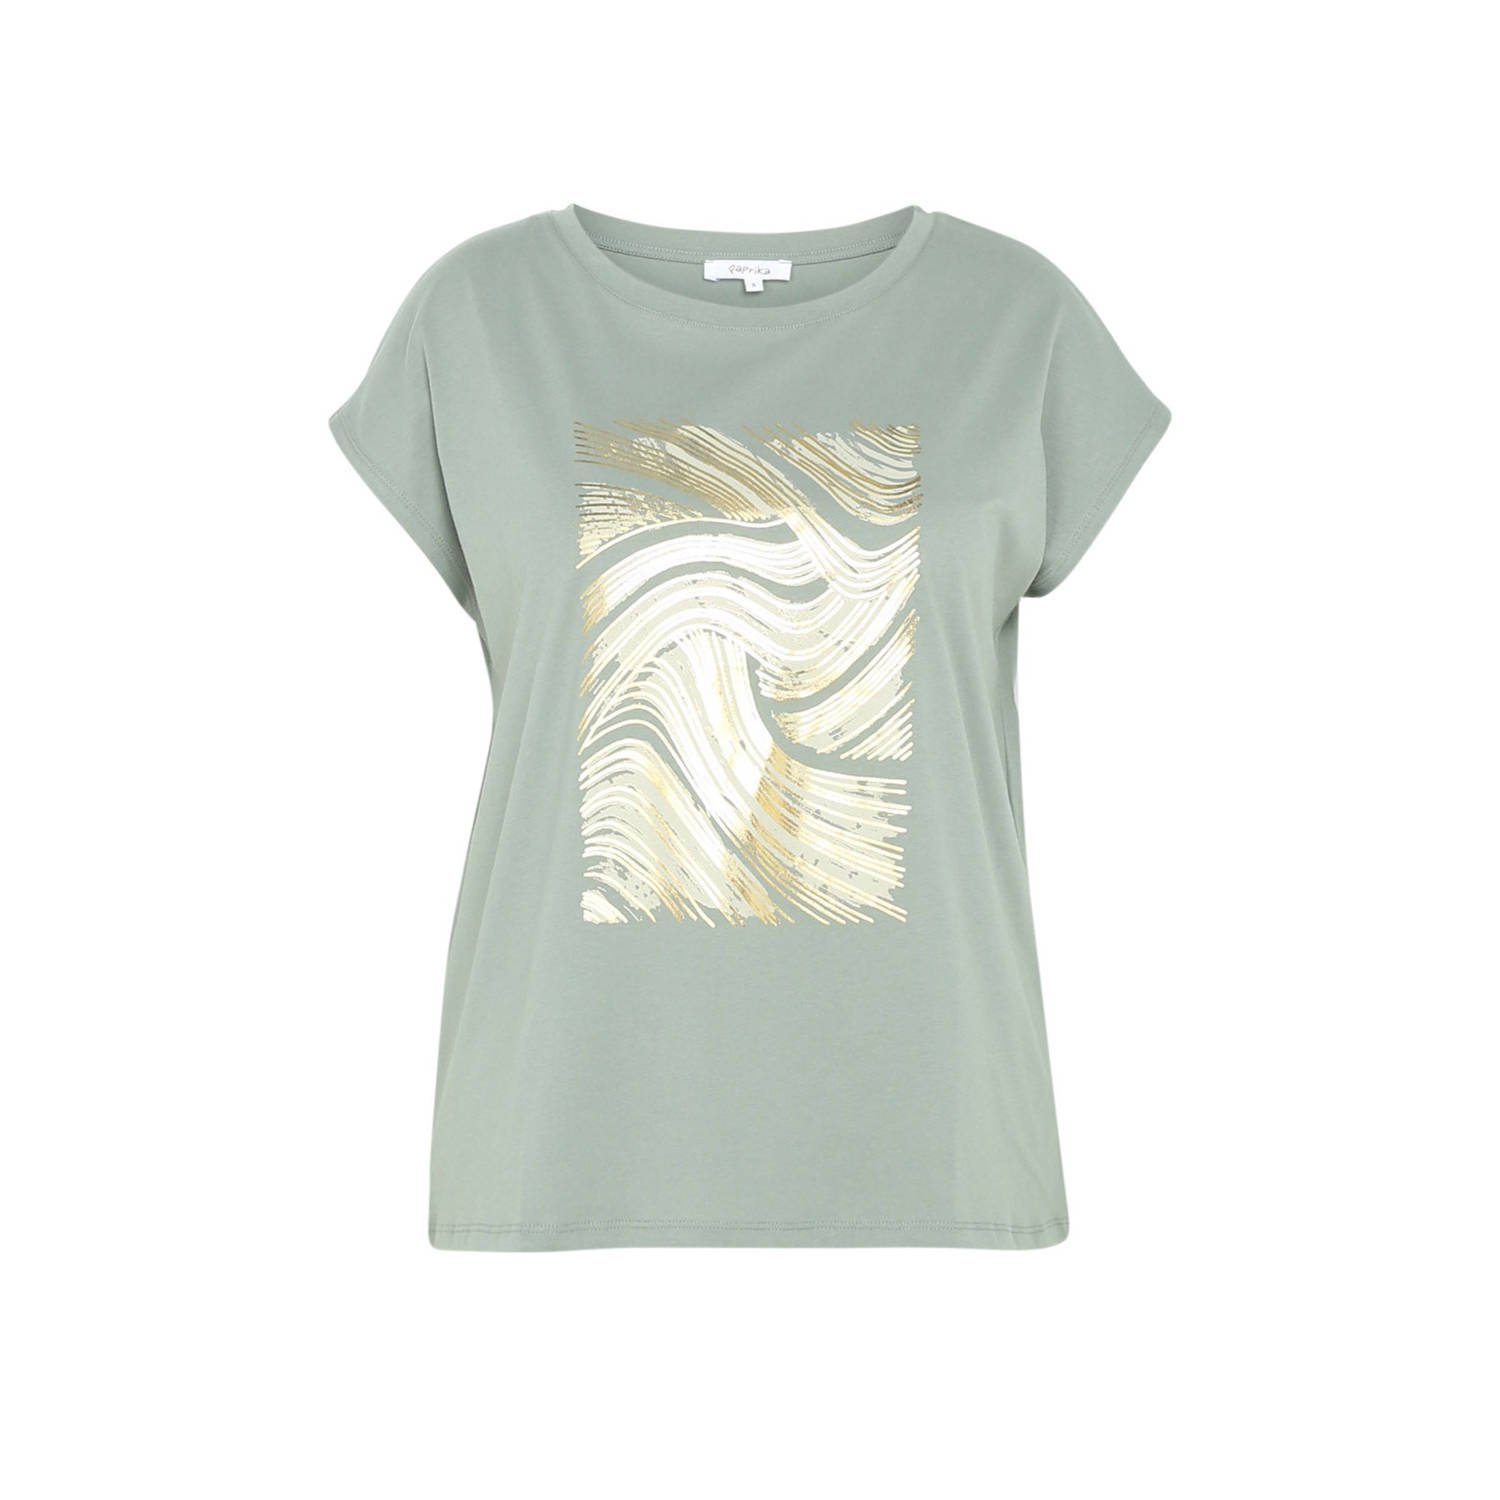 Paprika T-shirt met printopdruk groen ecru goud